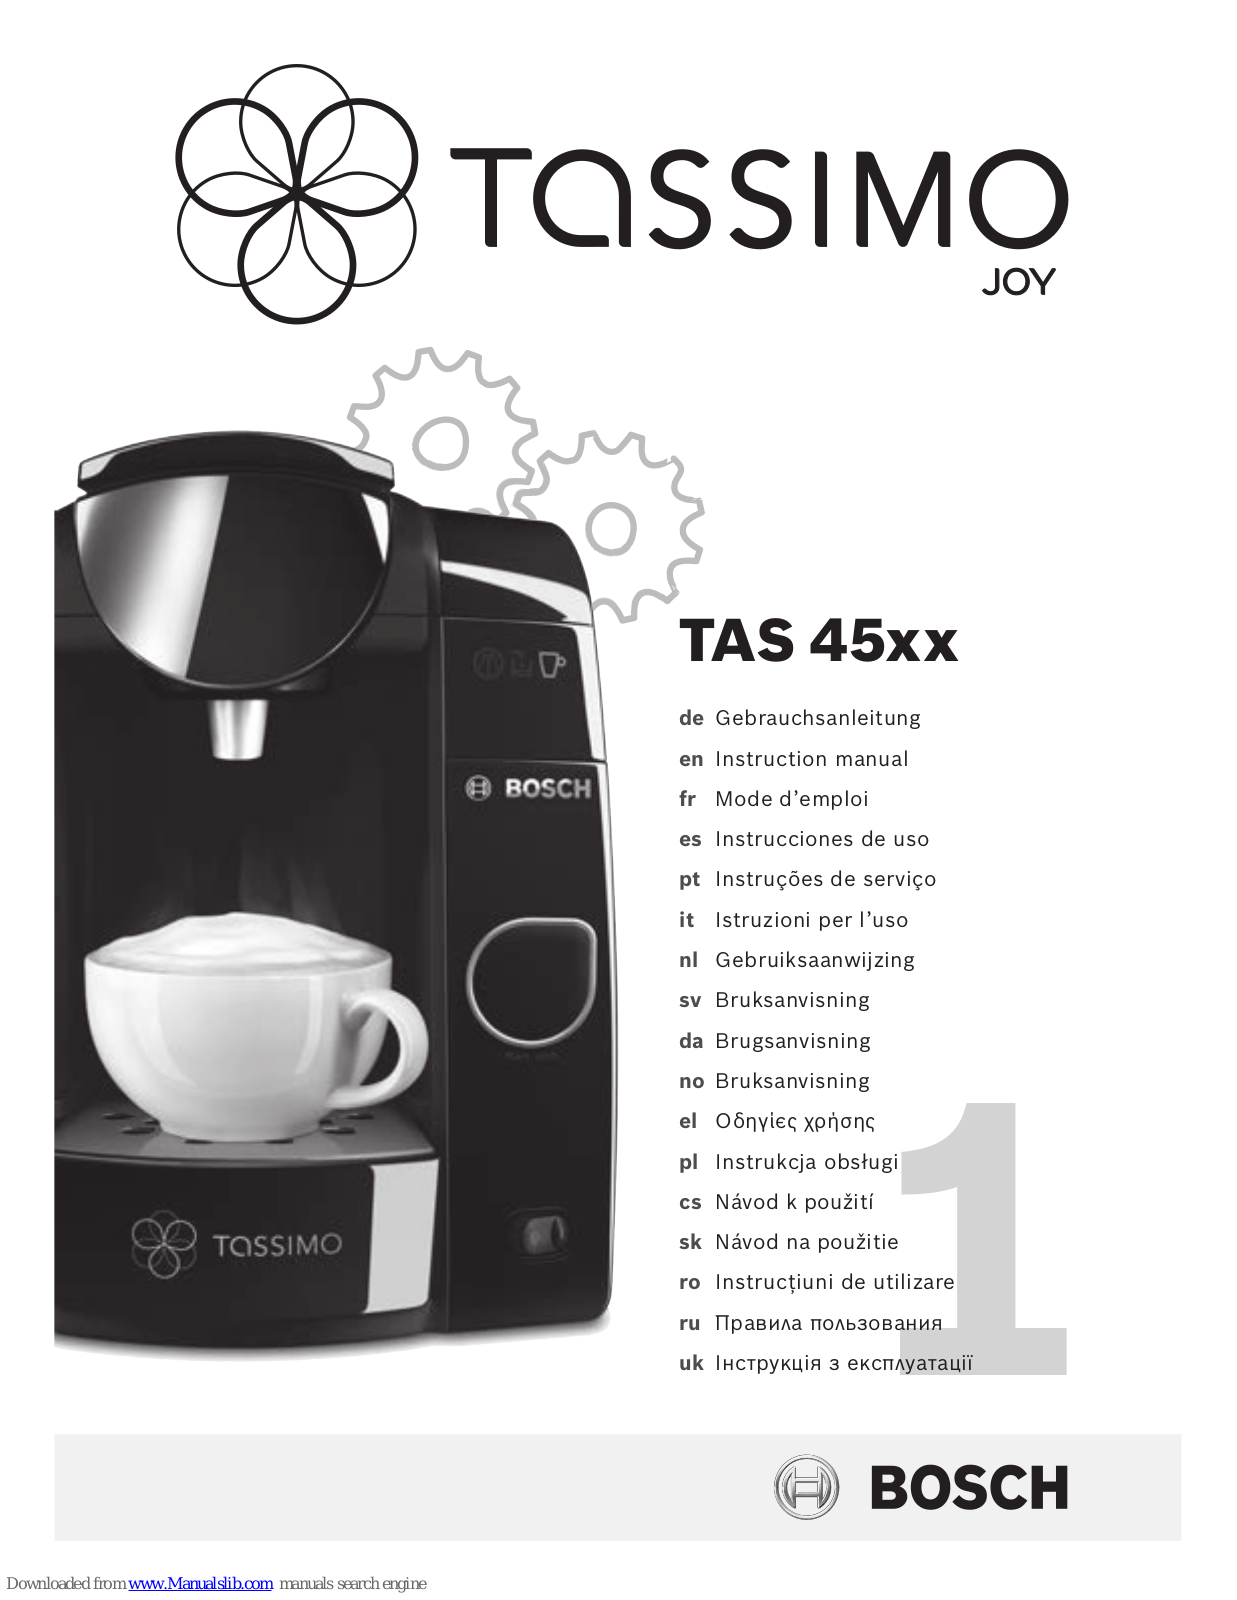 Bosch TAS 45, TASSIMO VIVY TAS 12xx, TASSIMO JOYTAS 45xx, Tassimo TAS 32, TASSIMO TAS 55 Instruction Manual